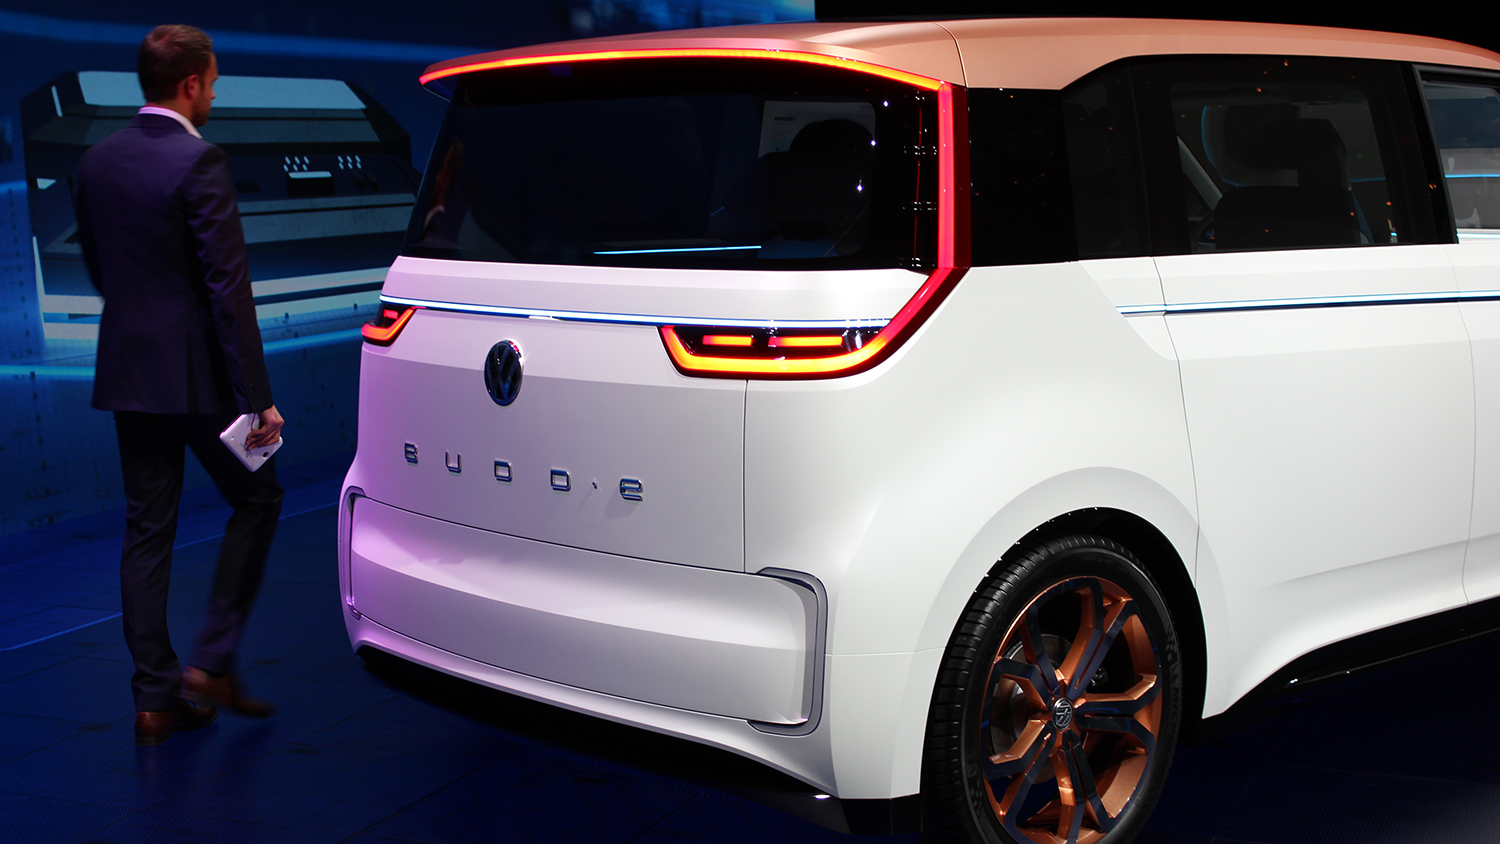 VW Budd-e concept reveal photos